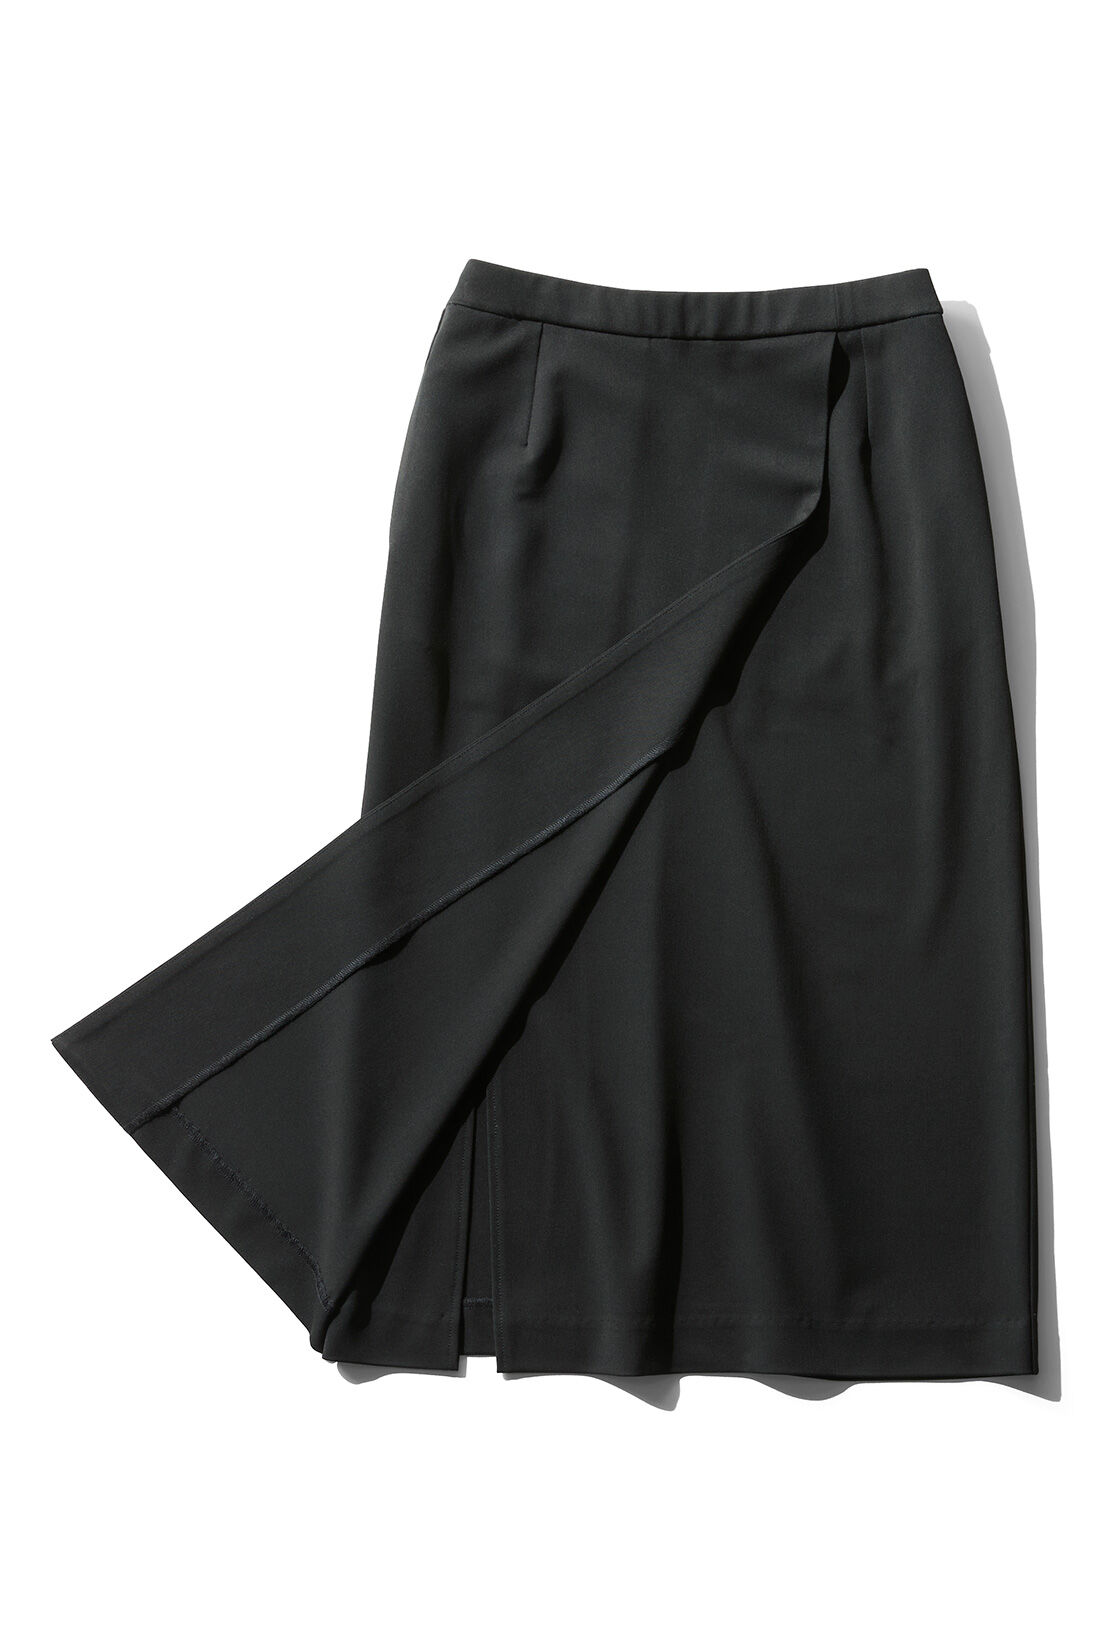 IEDIT[イディット]　いつもキレイな黒が続く オンオフ万能純黒デザインスカート〈ブラック〉